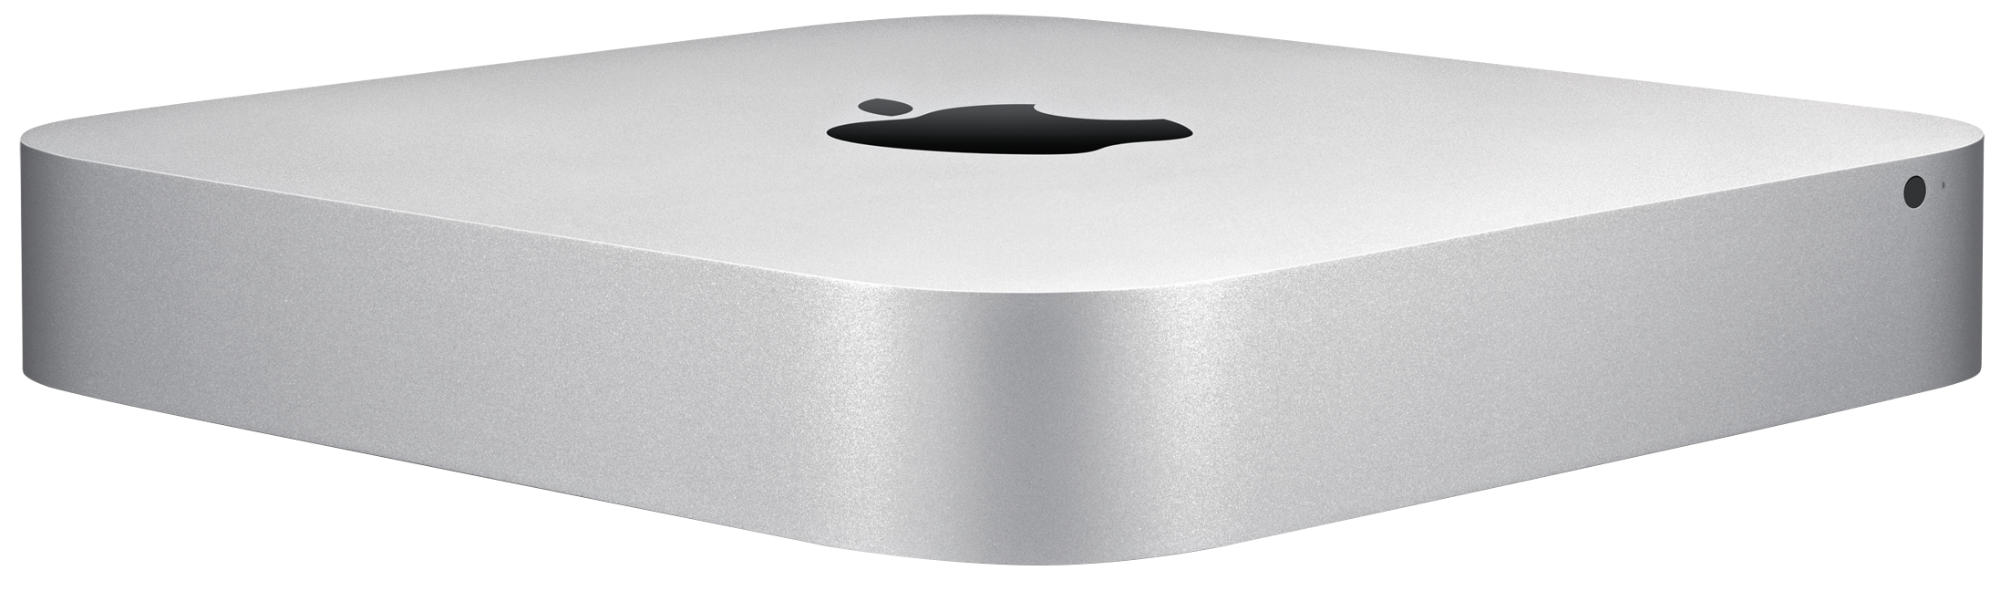 Apple Mac Mini 2014 mgeq2ypa dual core i5 2.8 ghz iris graphics 2.8ghz8gb1tb 8 ram 1 tb fusion drive 2 8gb 1tb 28